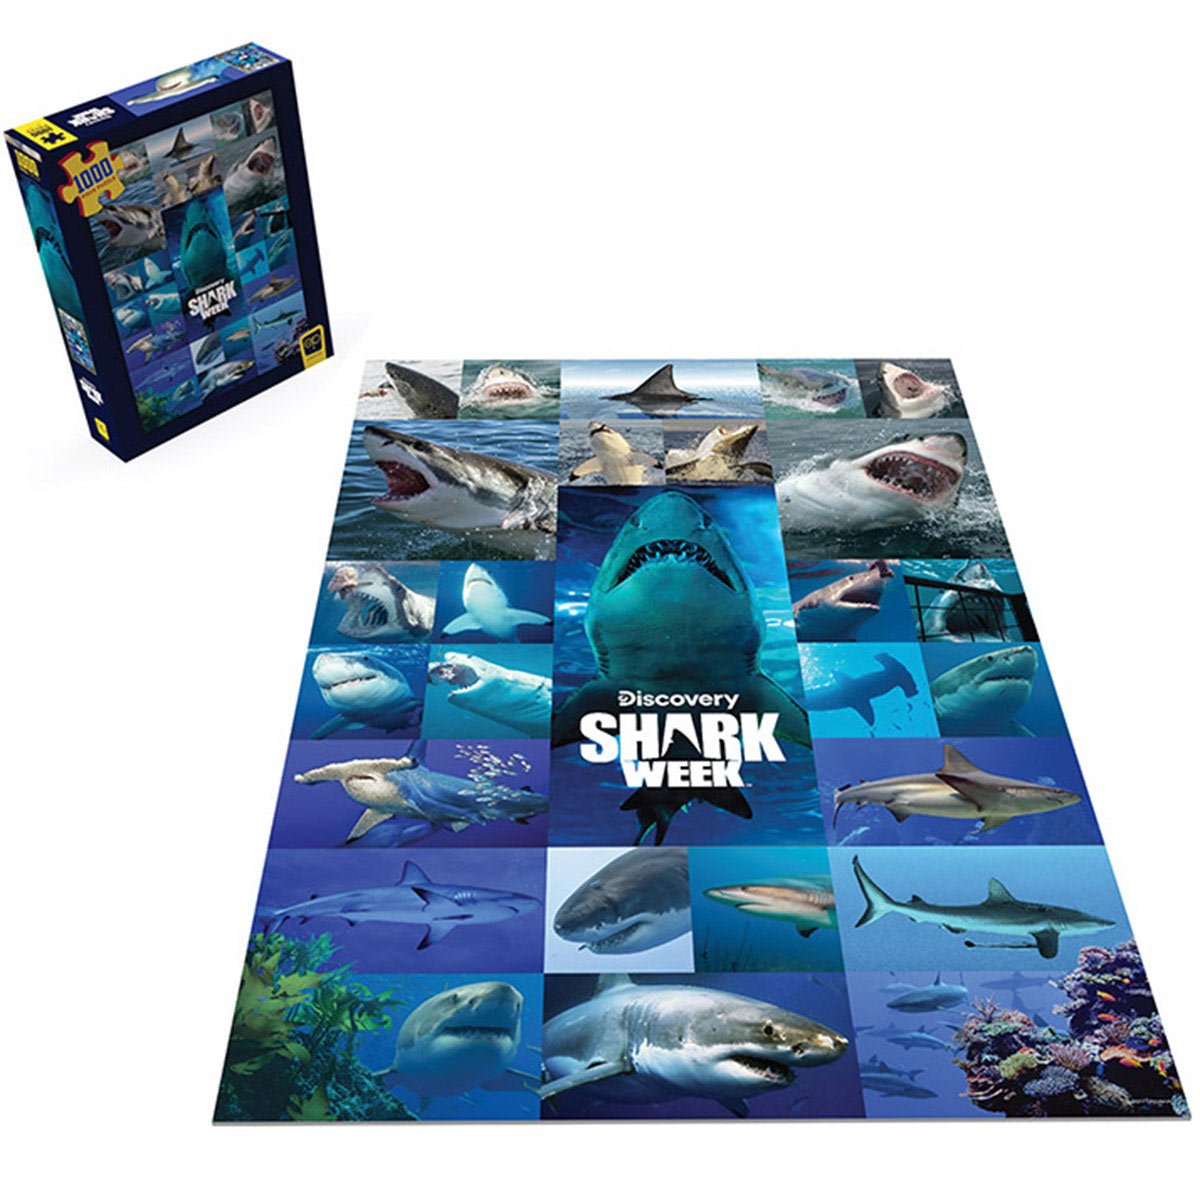 Shark Week Predators of the Deep Monopoly Edition